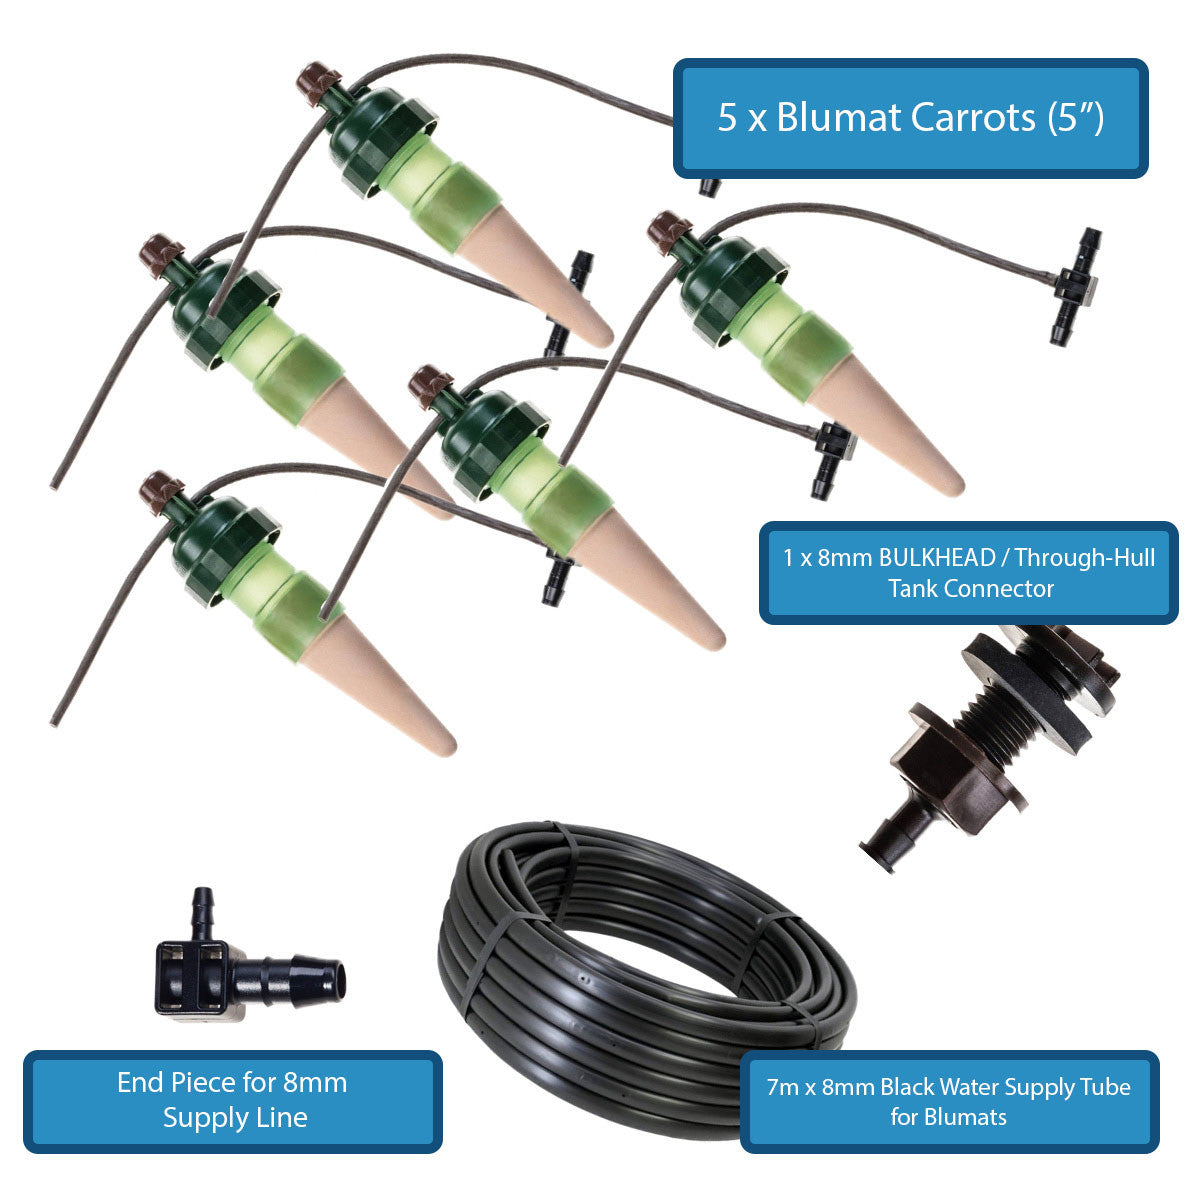 Blumat Deck & Planter Box Kits (Tropf Systems) (Automatic Watering Systems)